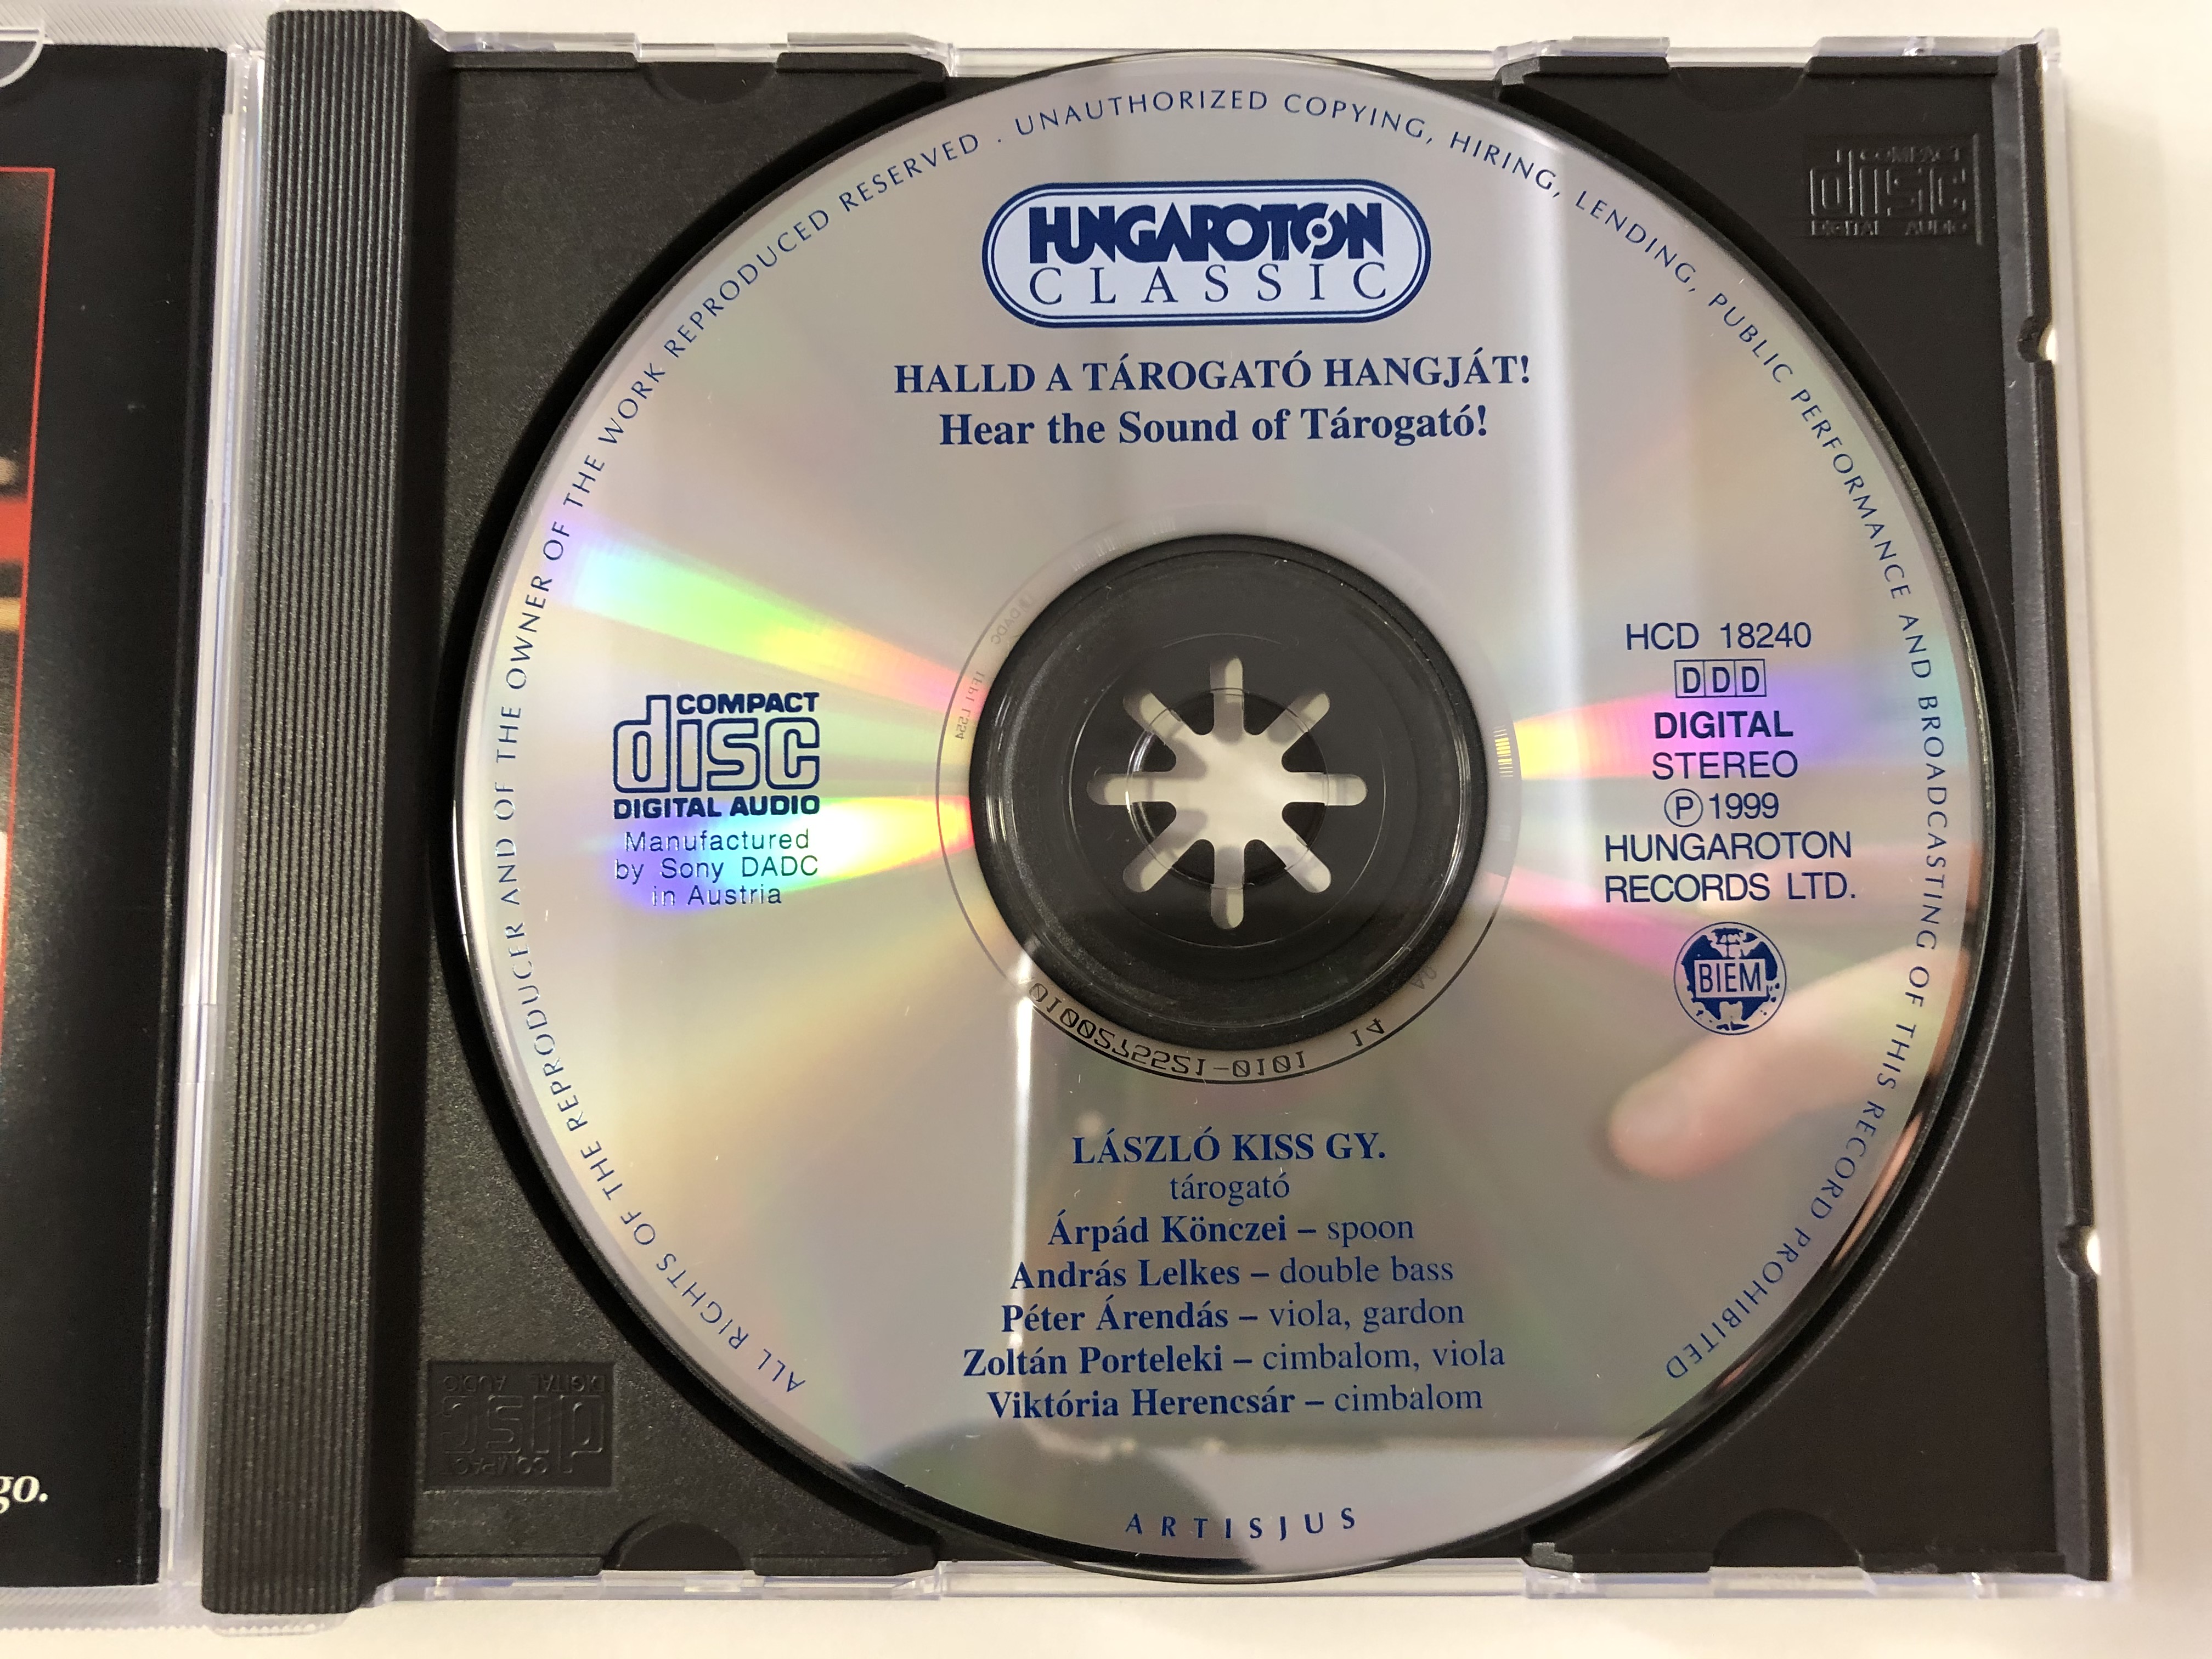 halld-a-t-rogat-hangj-t-hear-the-sound-of-t-rogat-l-szl-kiss-gy.-tarogato-hungaroton-classic-audio-cd-1999-stereo-hcd-18240-3-.jpg